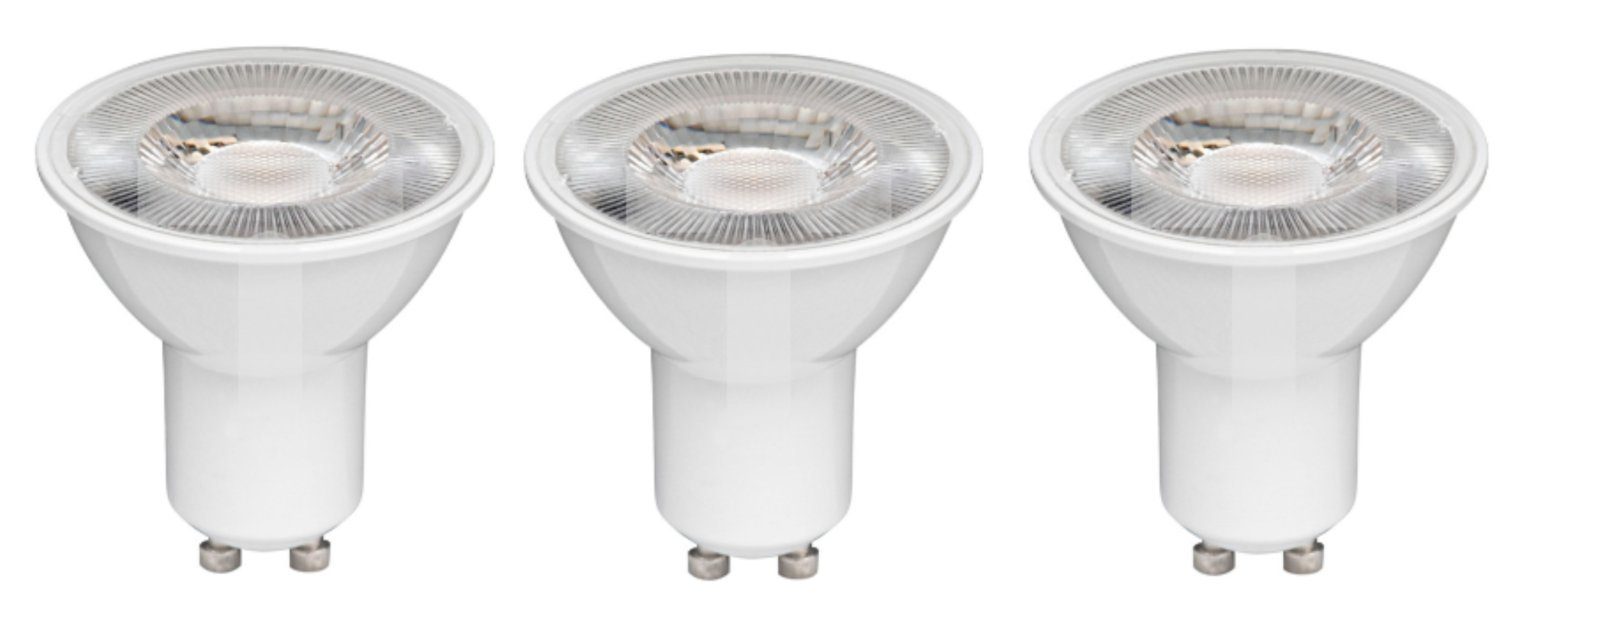 Osram LED-Leuchtmittel Osram GU10 LED PAR16 Lampe Strahler Spot 3er Pack, GU10, Warmweiß, Energiesparend, Mattiert, augen schonend